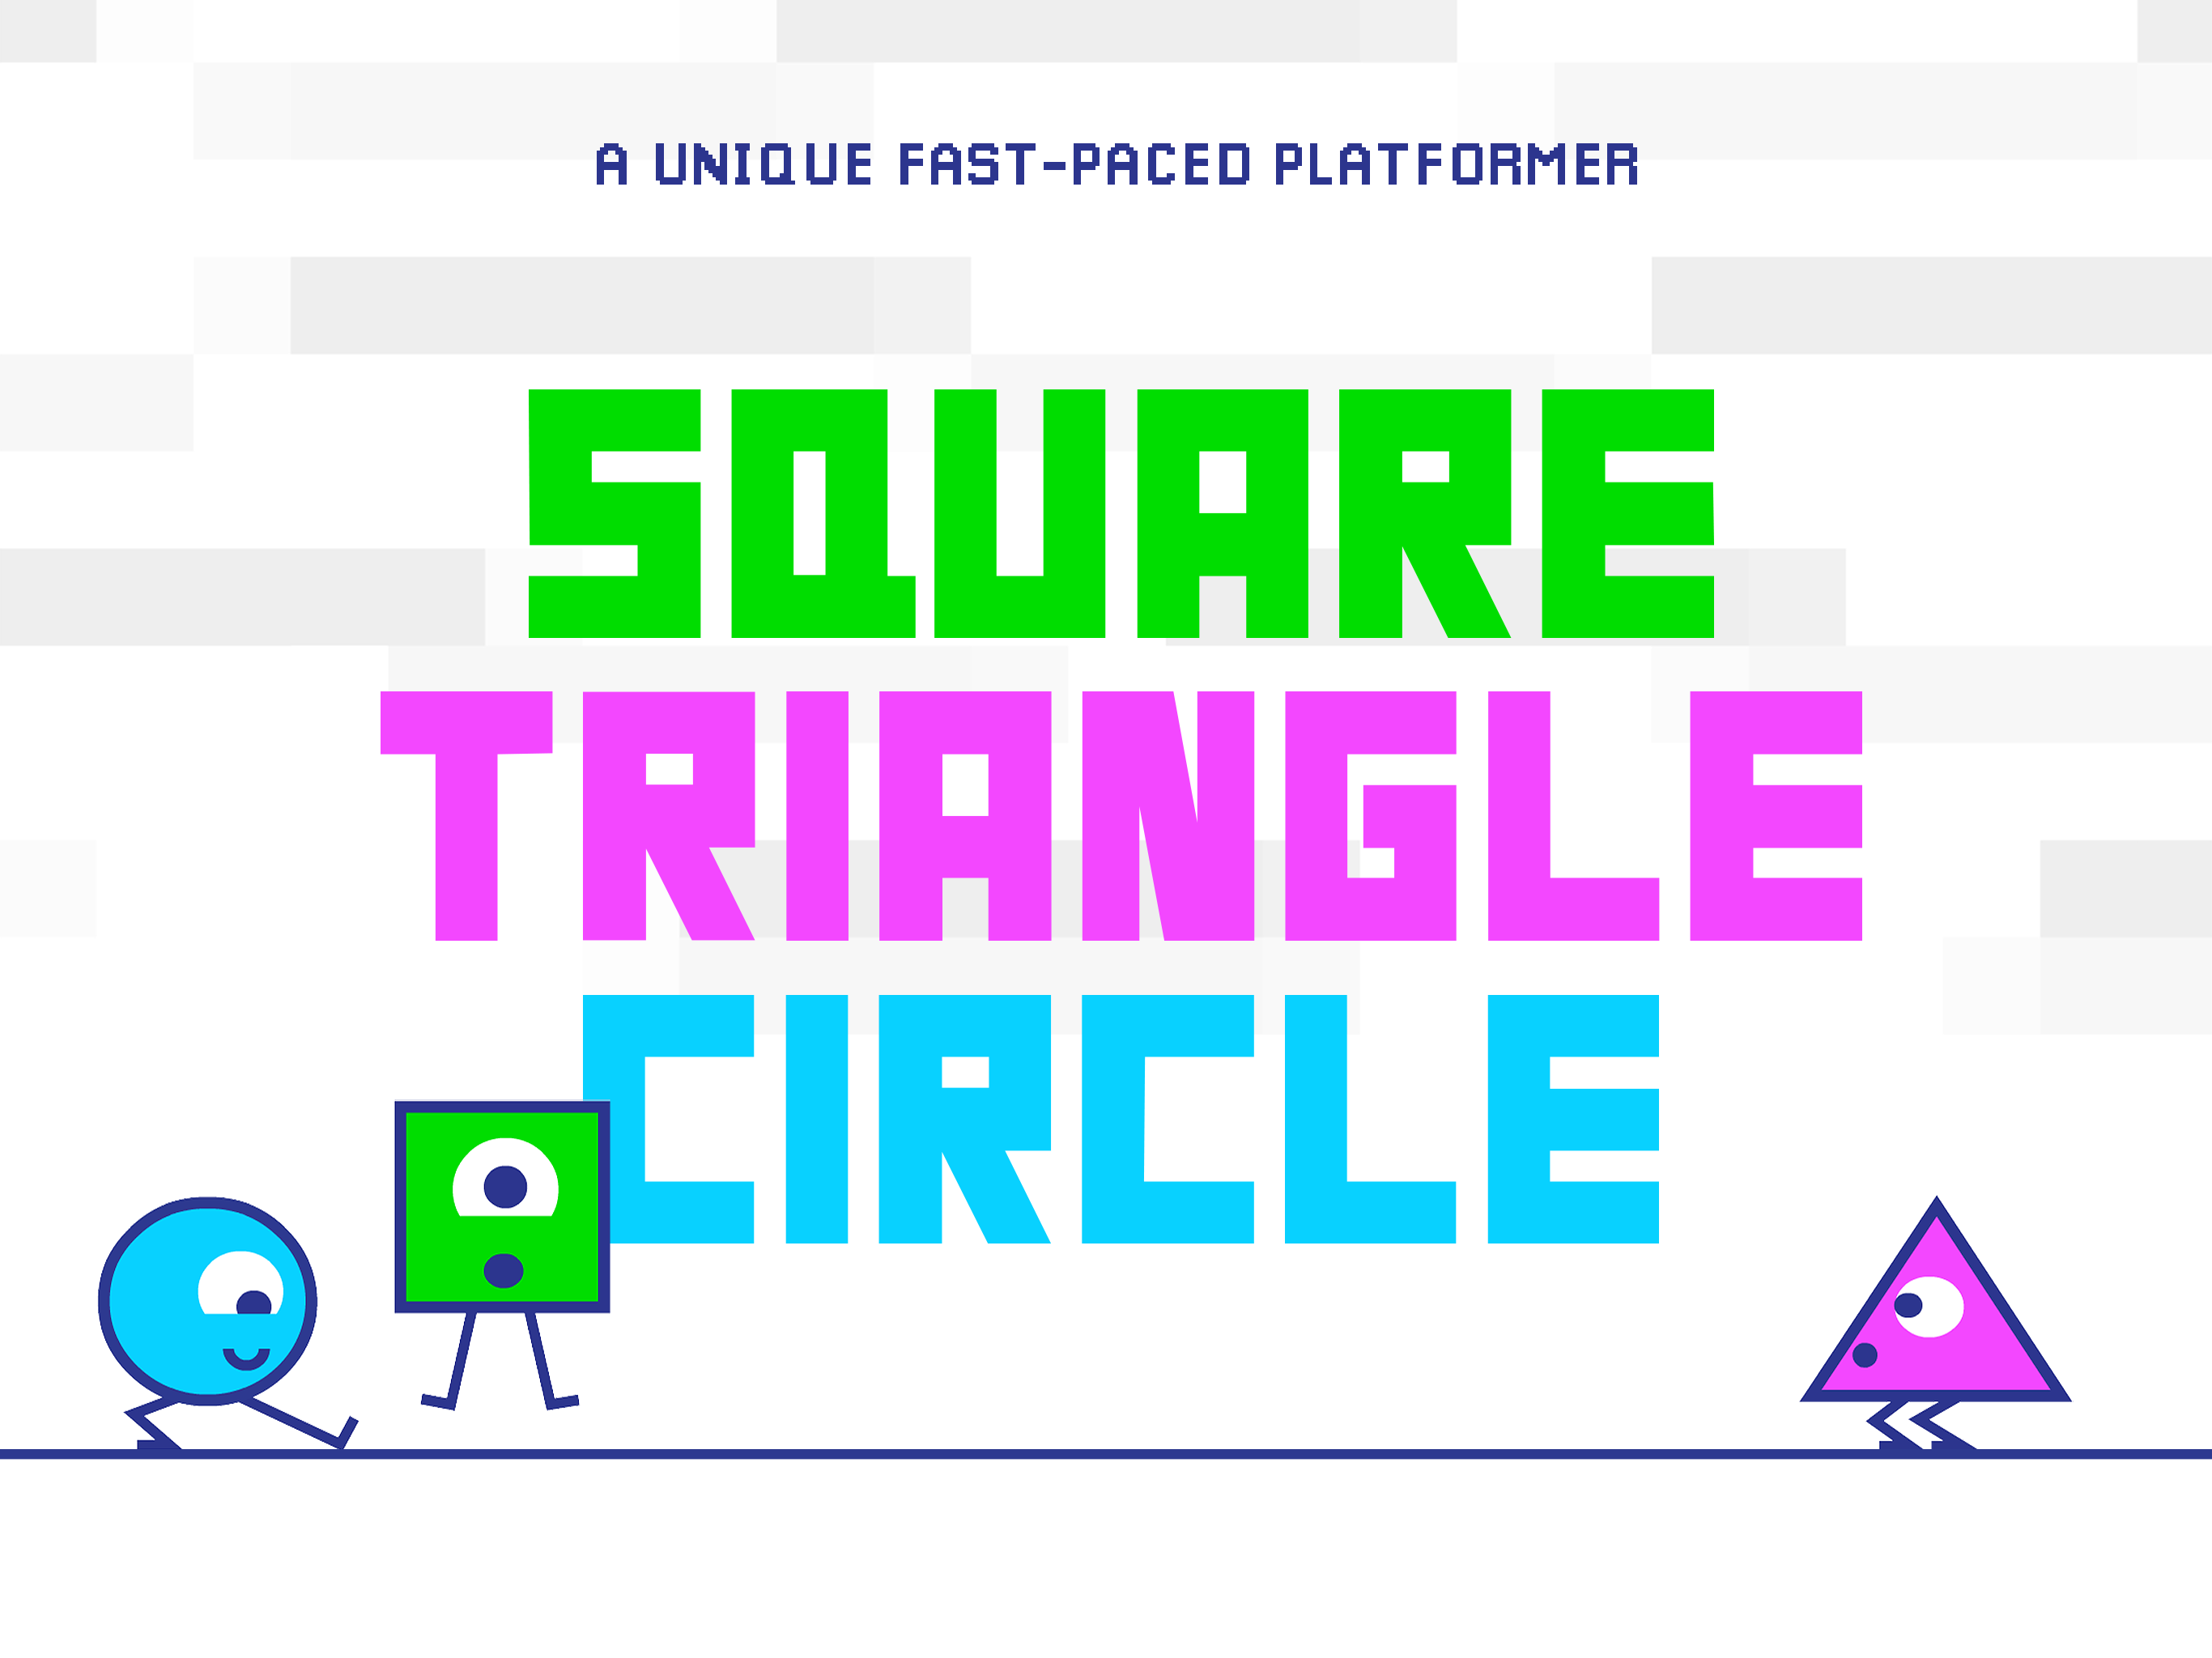 STC - Square Triangle Circle 게임 스크린 샷